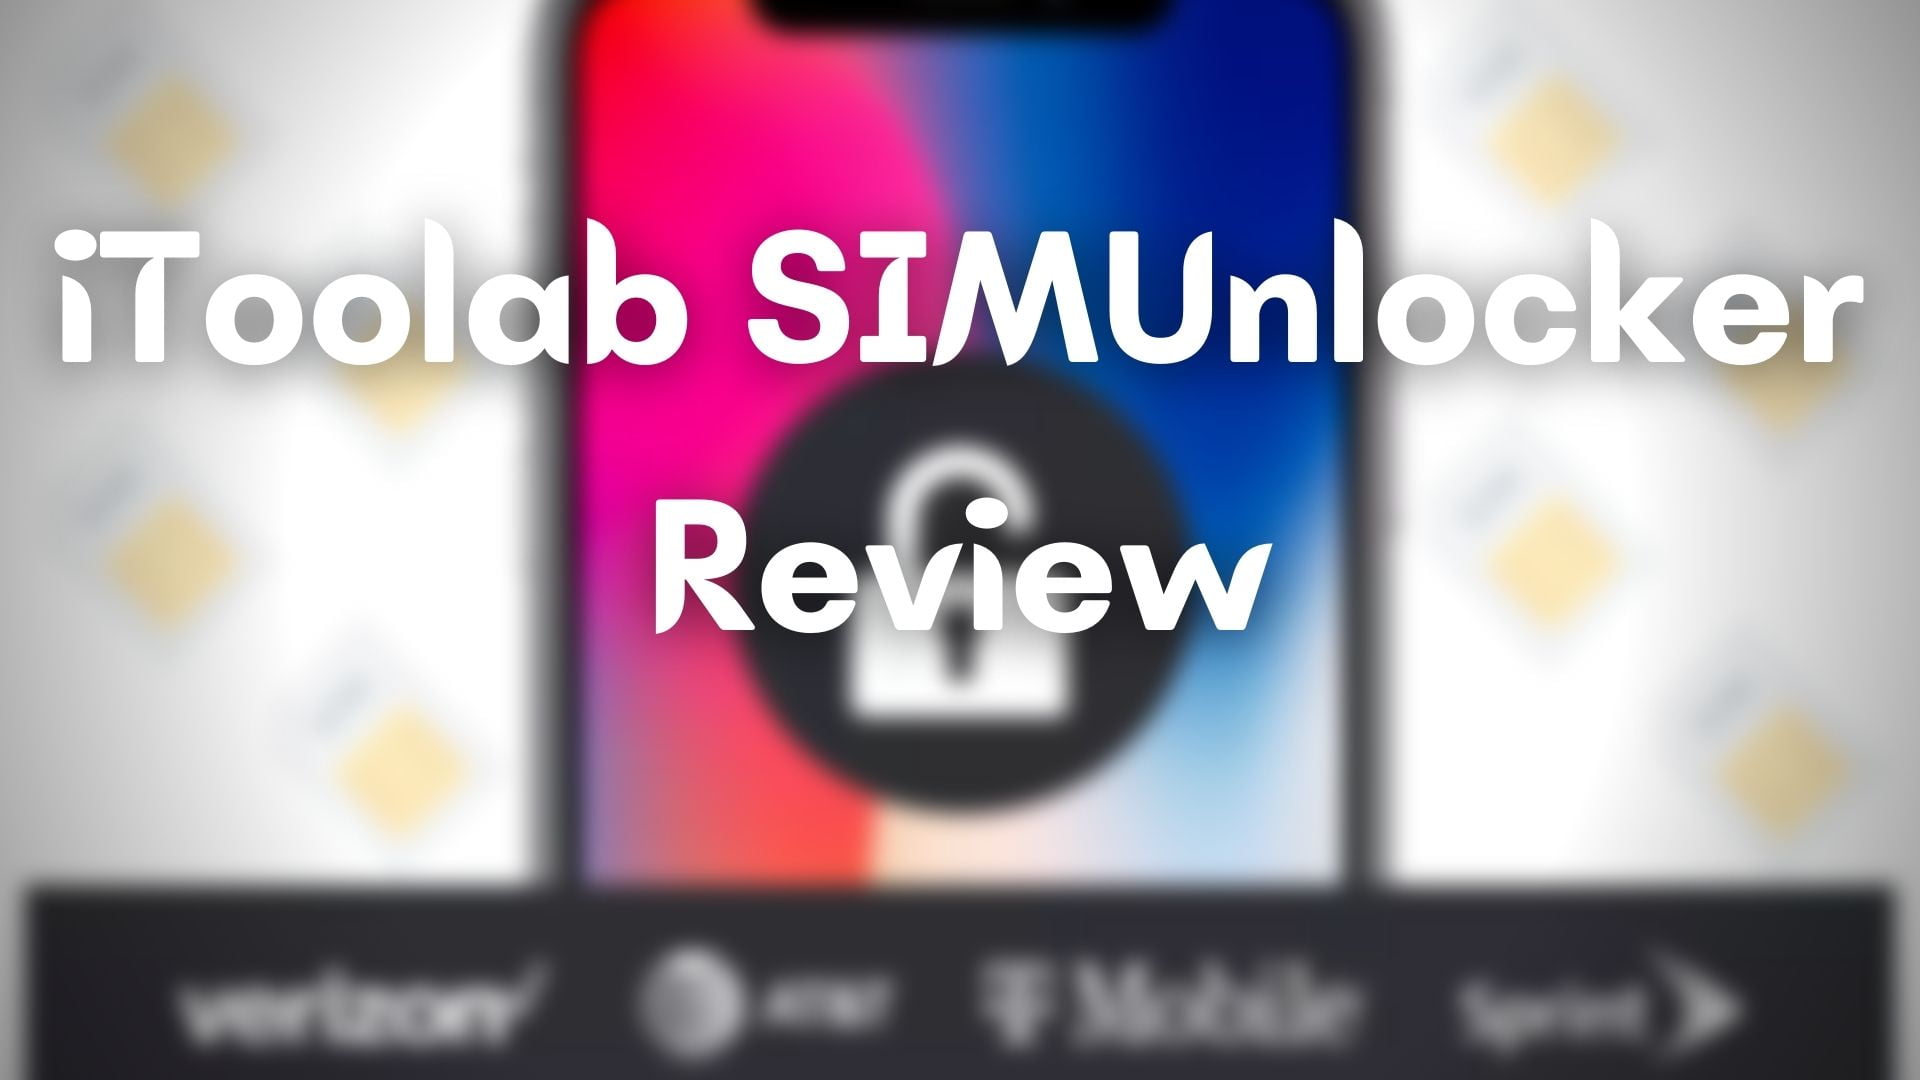 iToolab SIMUnlocker Review